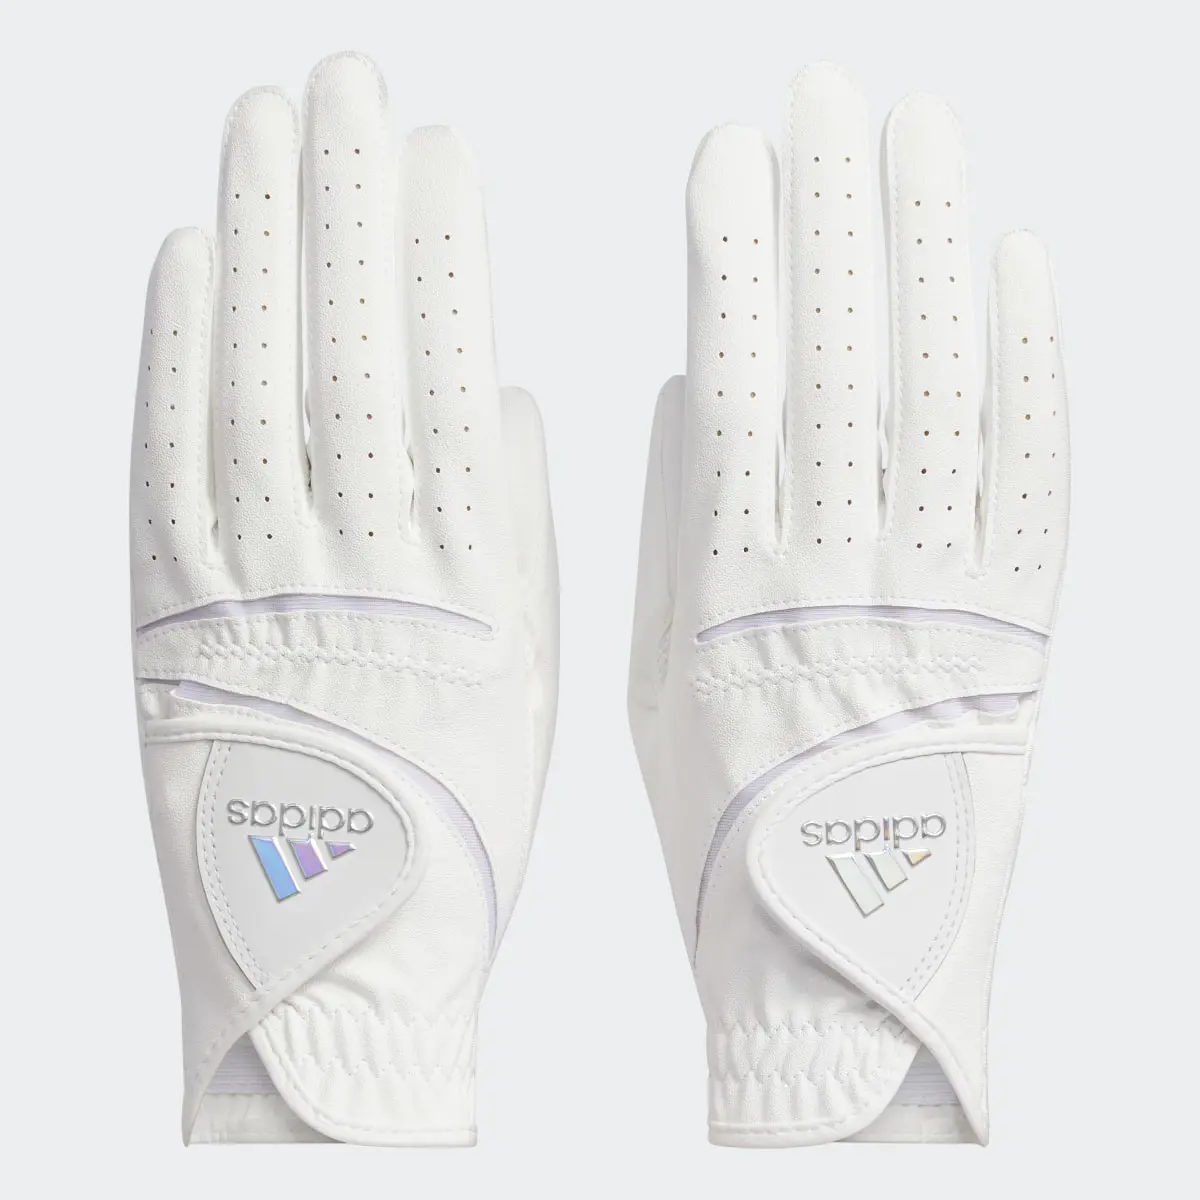 Adidas Light and Comfort Gloves. 1